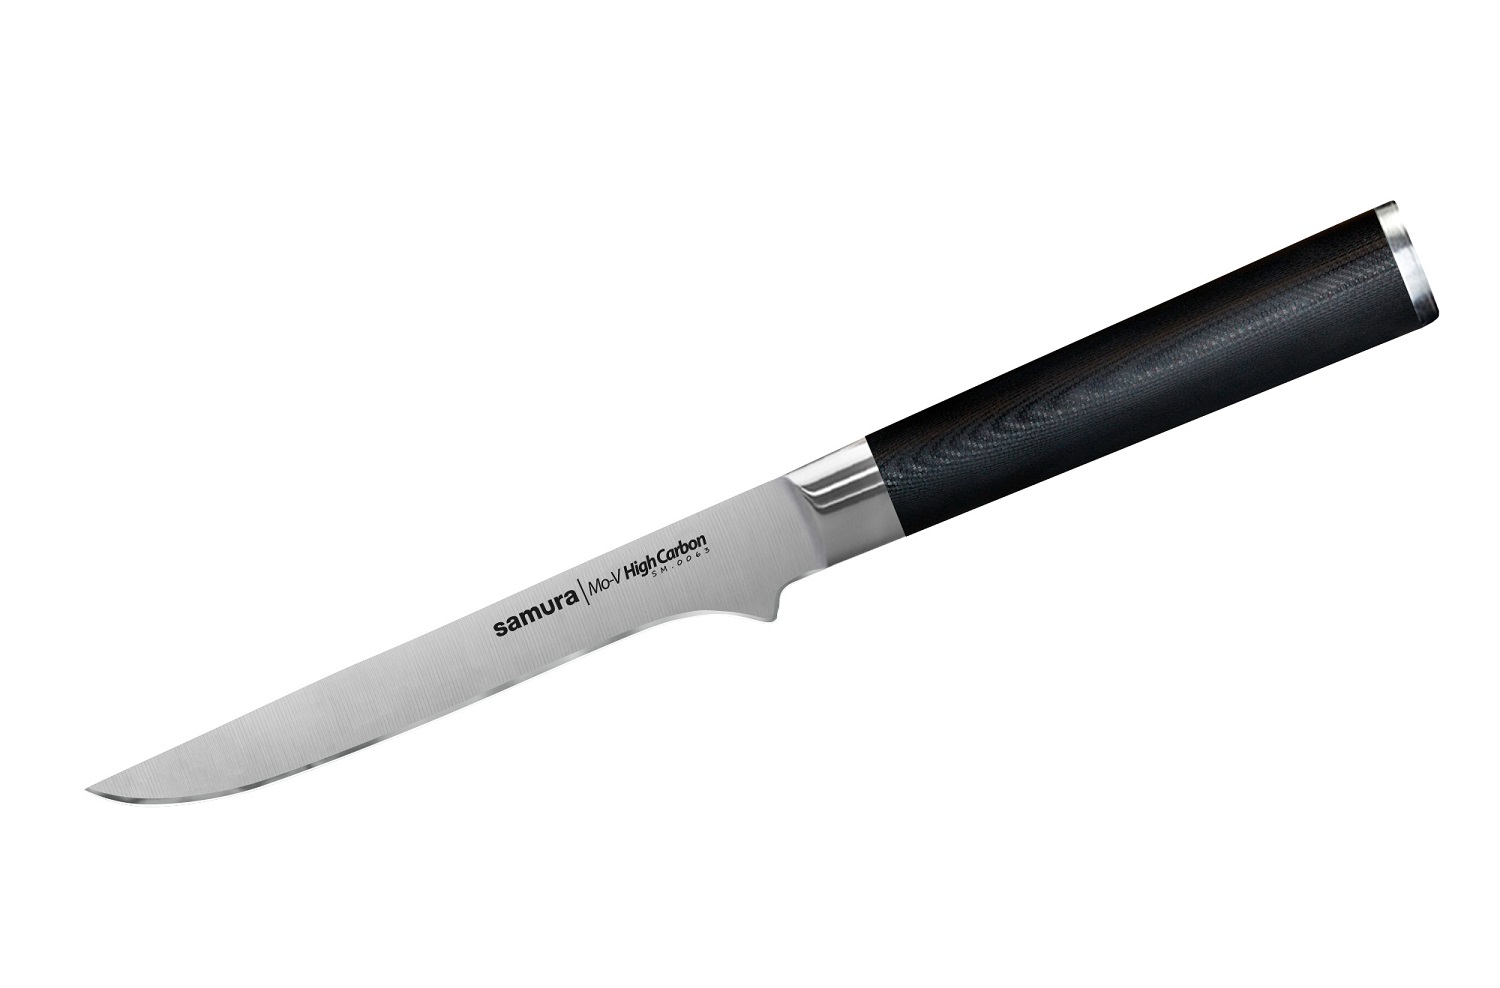 Нож Samura обвалочный Mo-V, 16,5 см, G-10 нож обвалочный damascus 16 5 см sd 0063 k samura